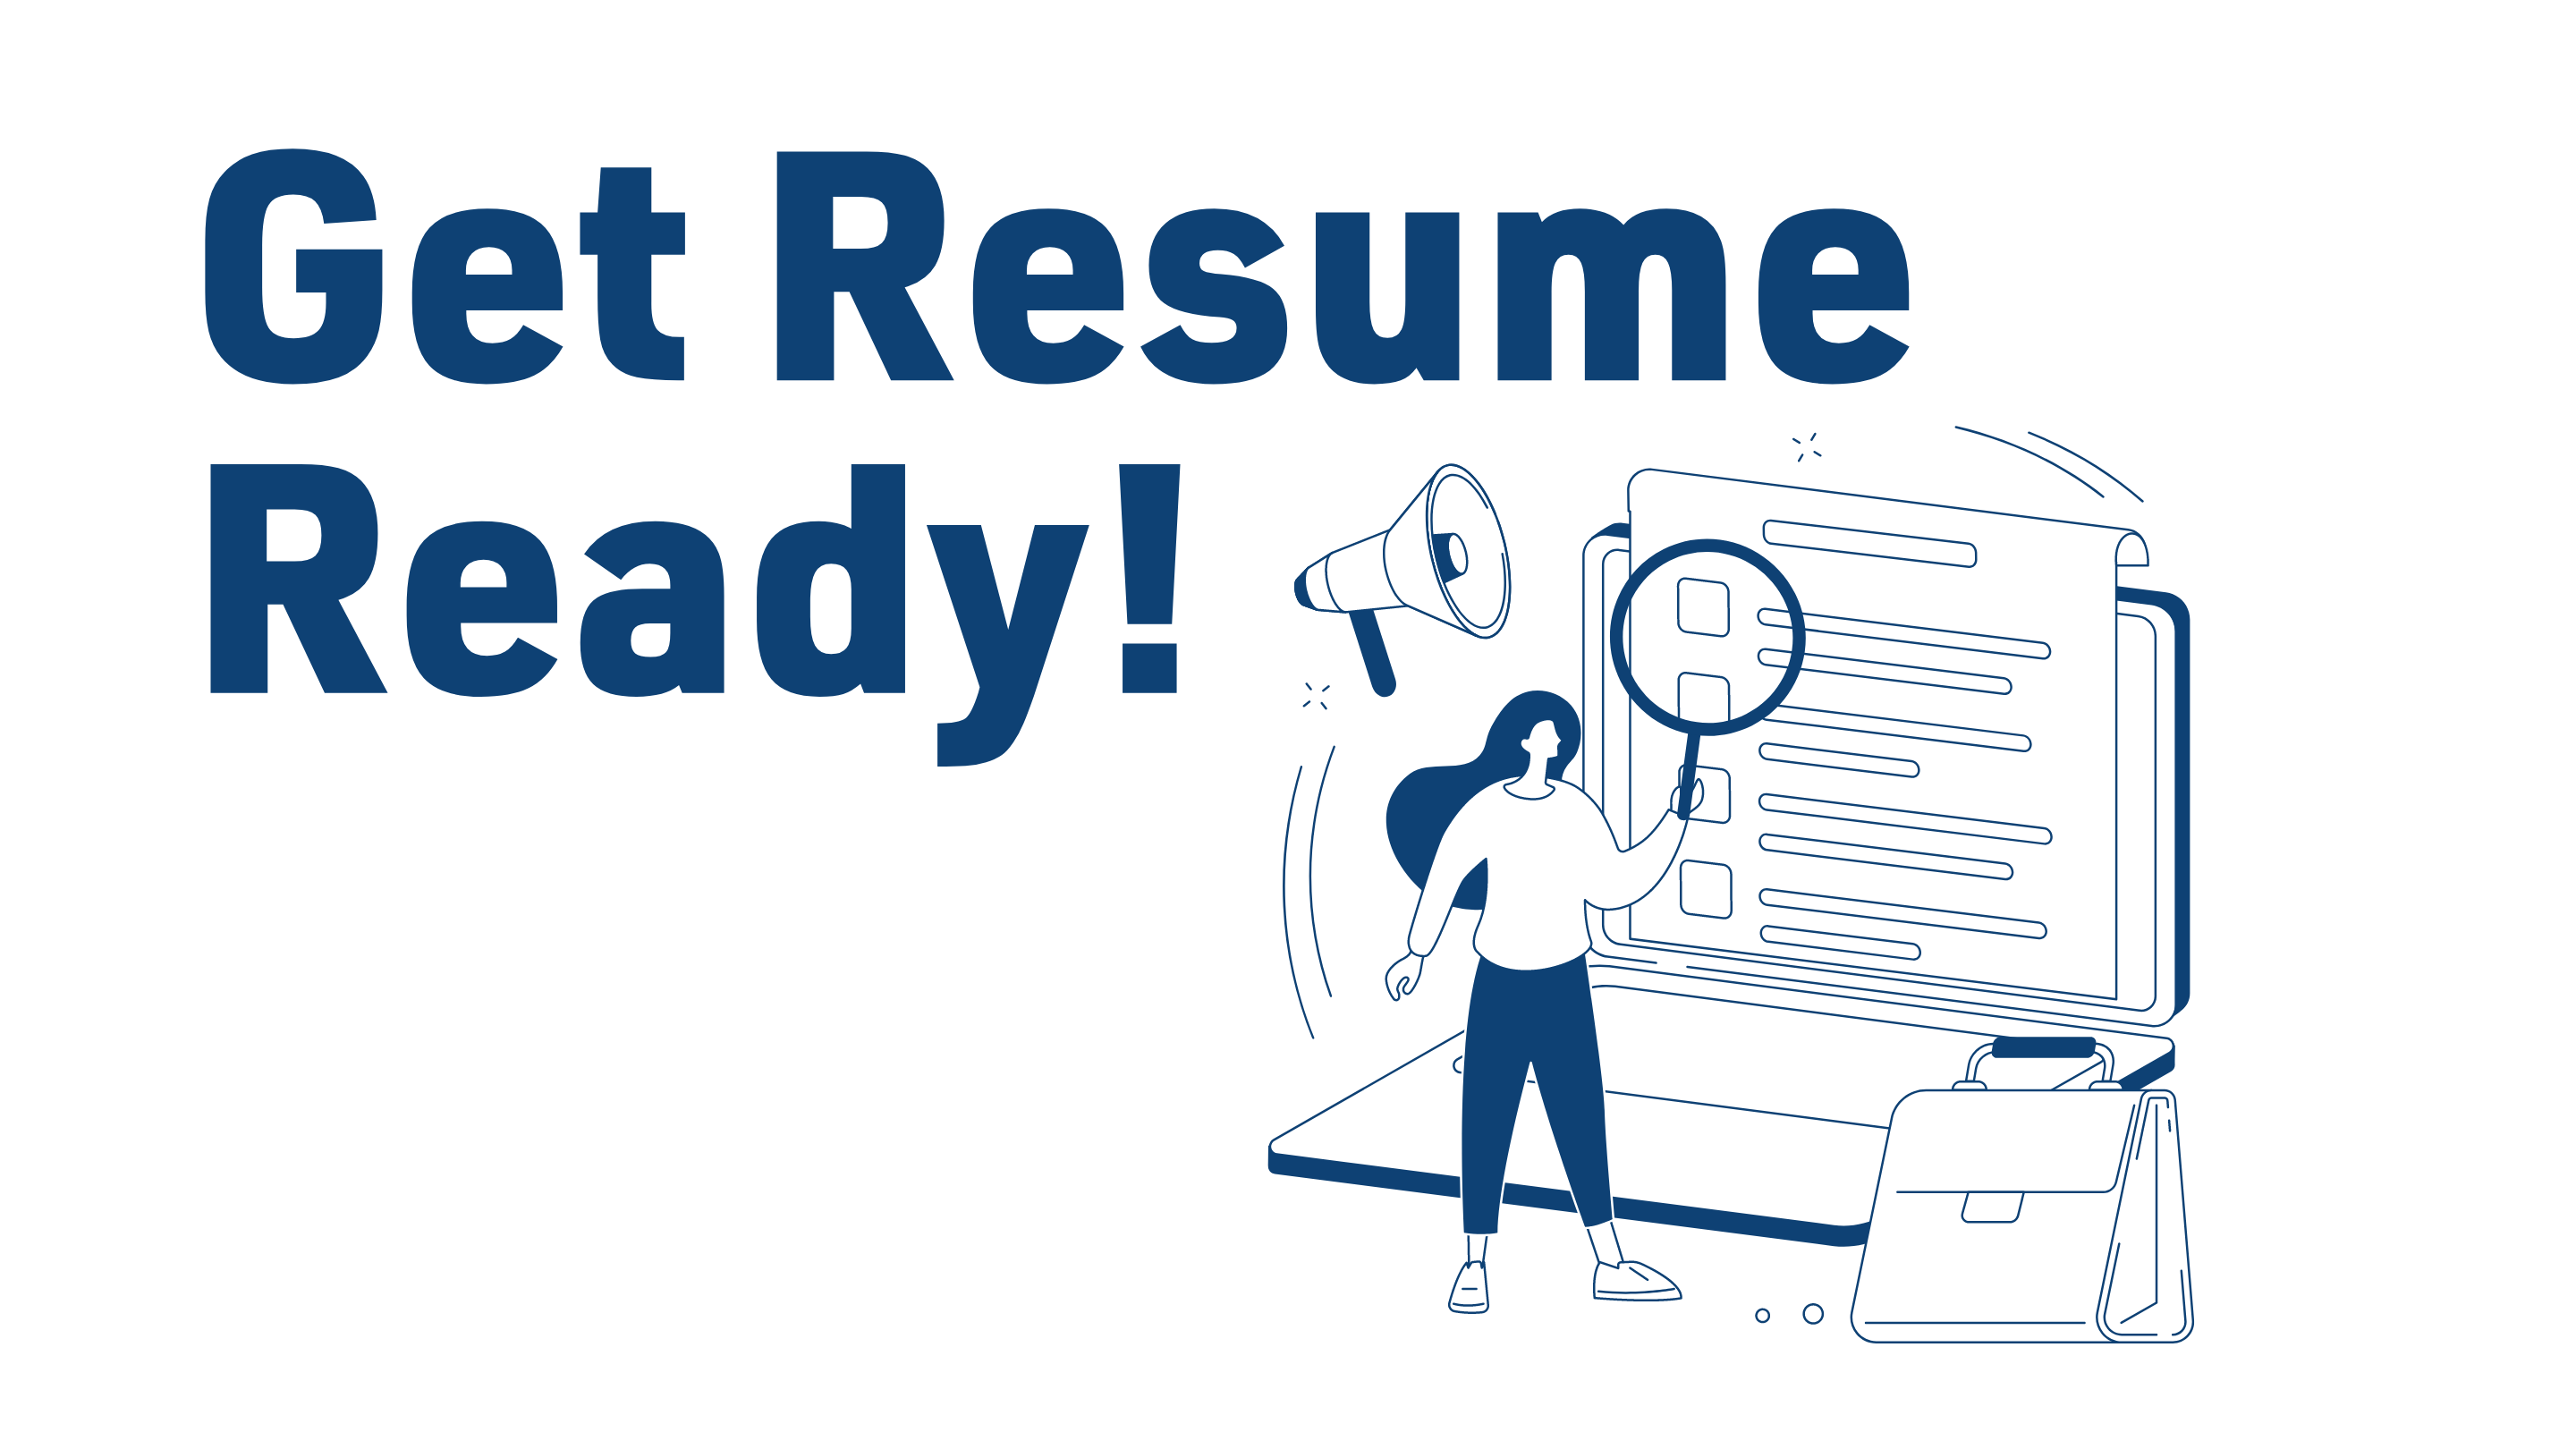 Get Resume Ready